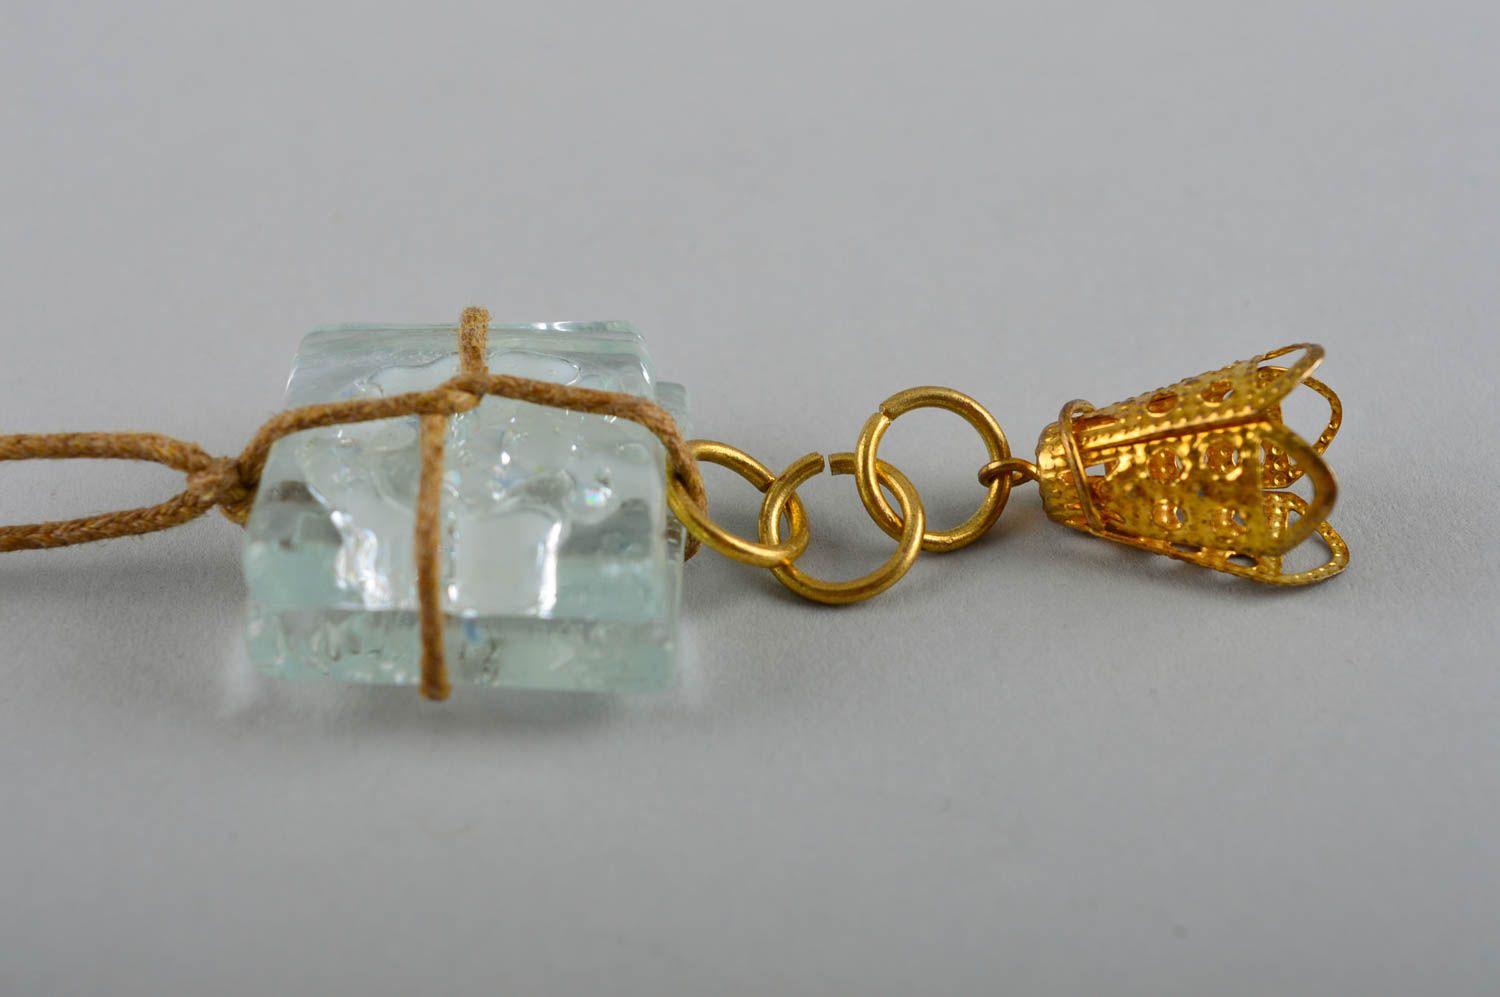 Handmade designer glass pendant unusual stylish pendant neck jewelry gift photo 5